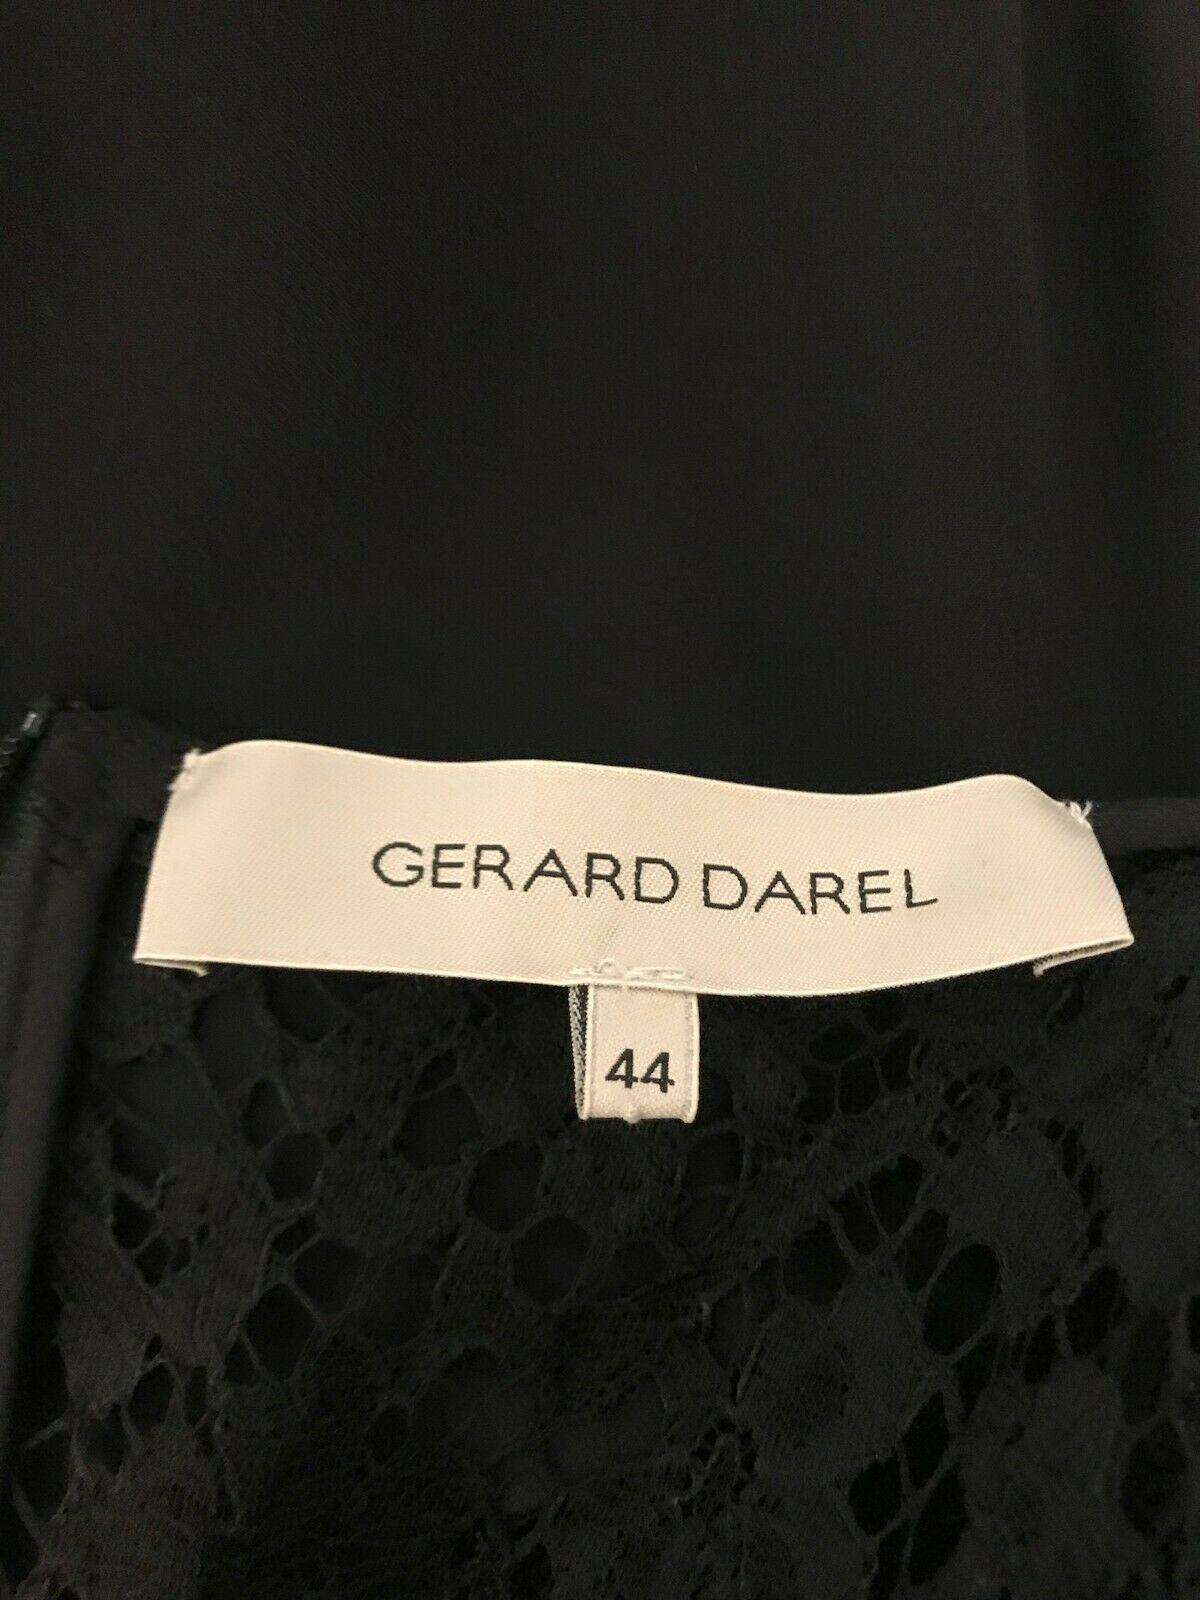 Gerard Darel Black Lace Short Sleeve Pencil Dress UK 16 US 12 EU 44 Timeless Fashions